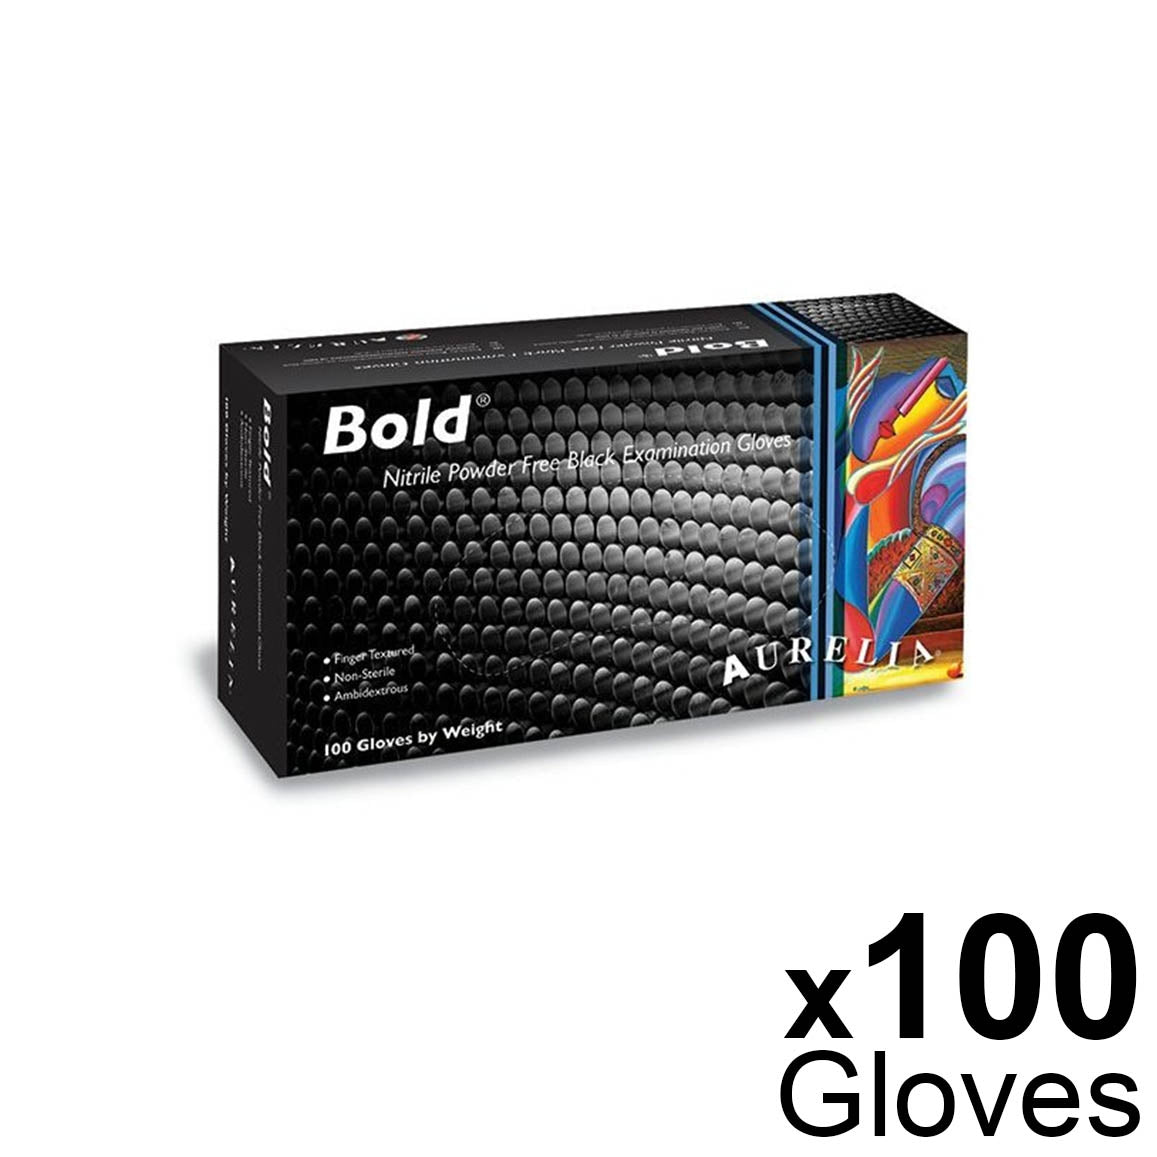 Aurelia Bold - Nitrile Powder Free Non-sterile Examination Gloves - Black, Box Of 100 - Extra Large